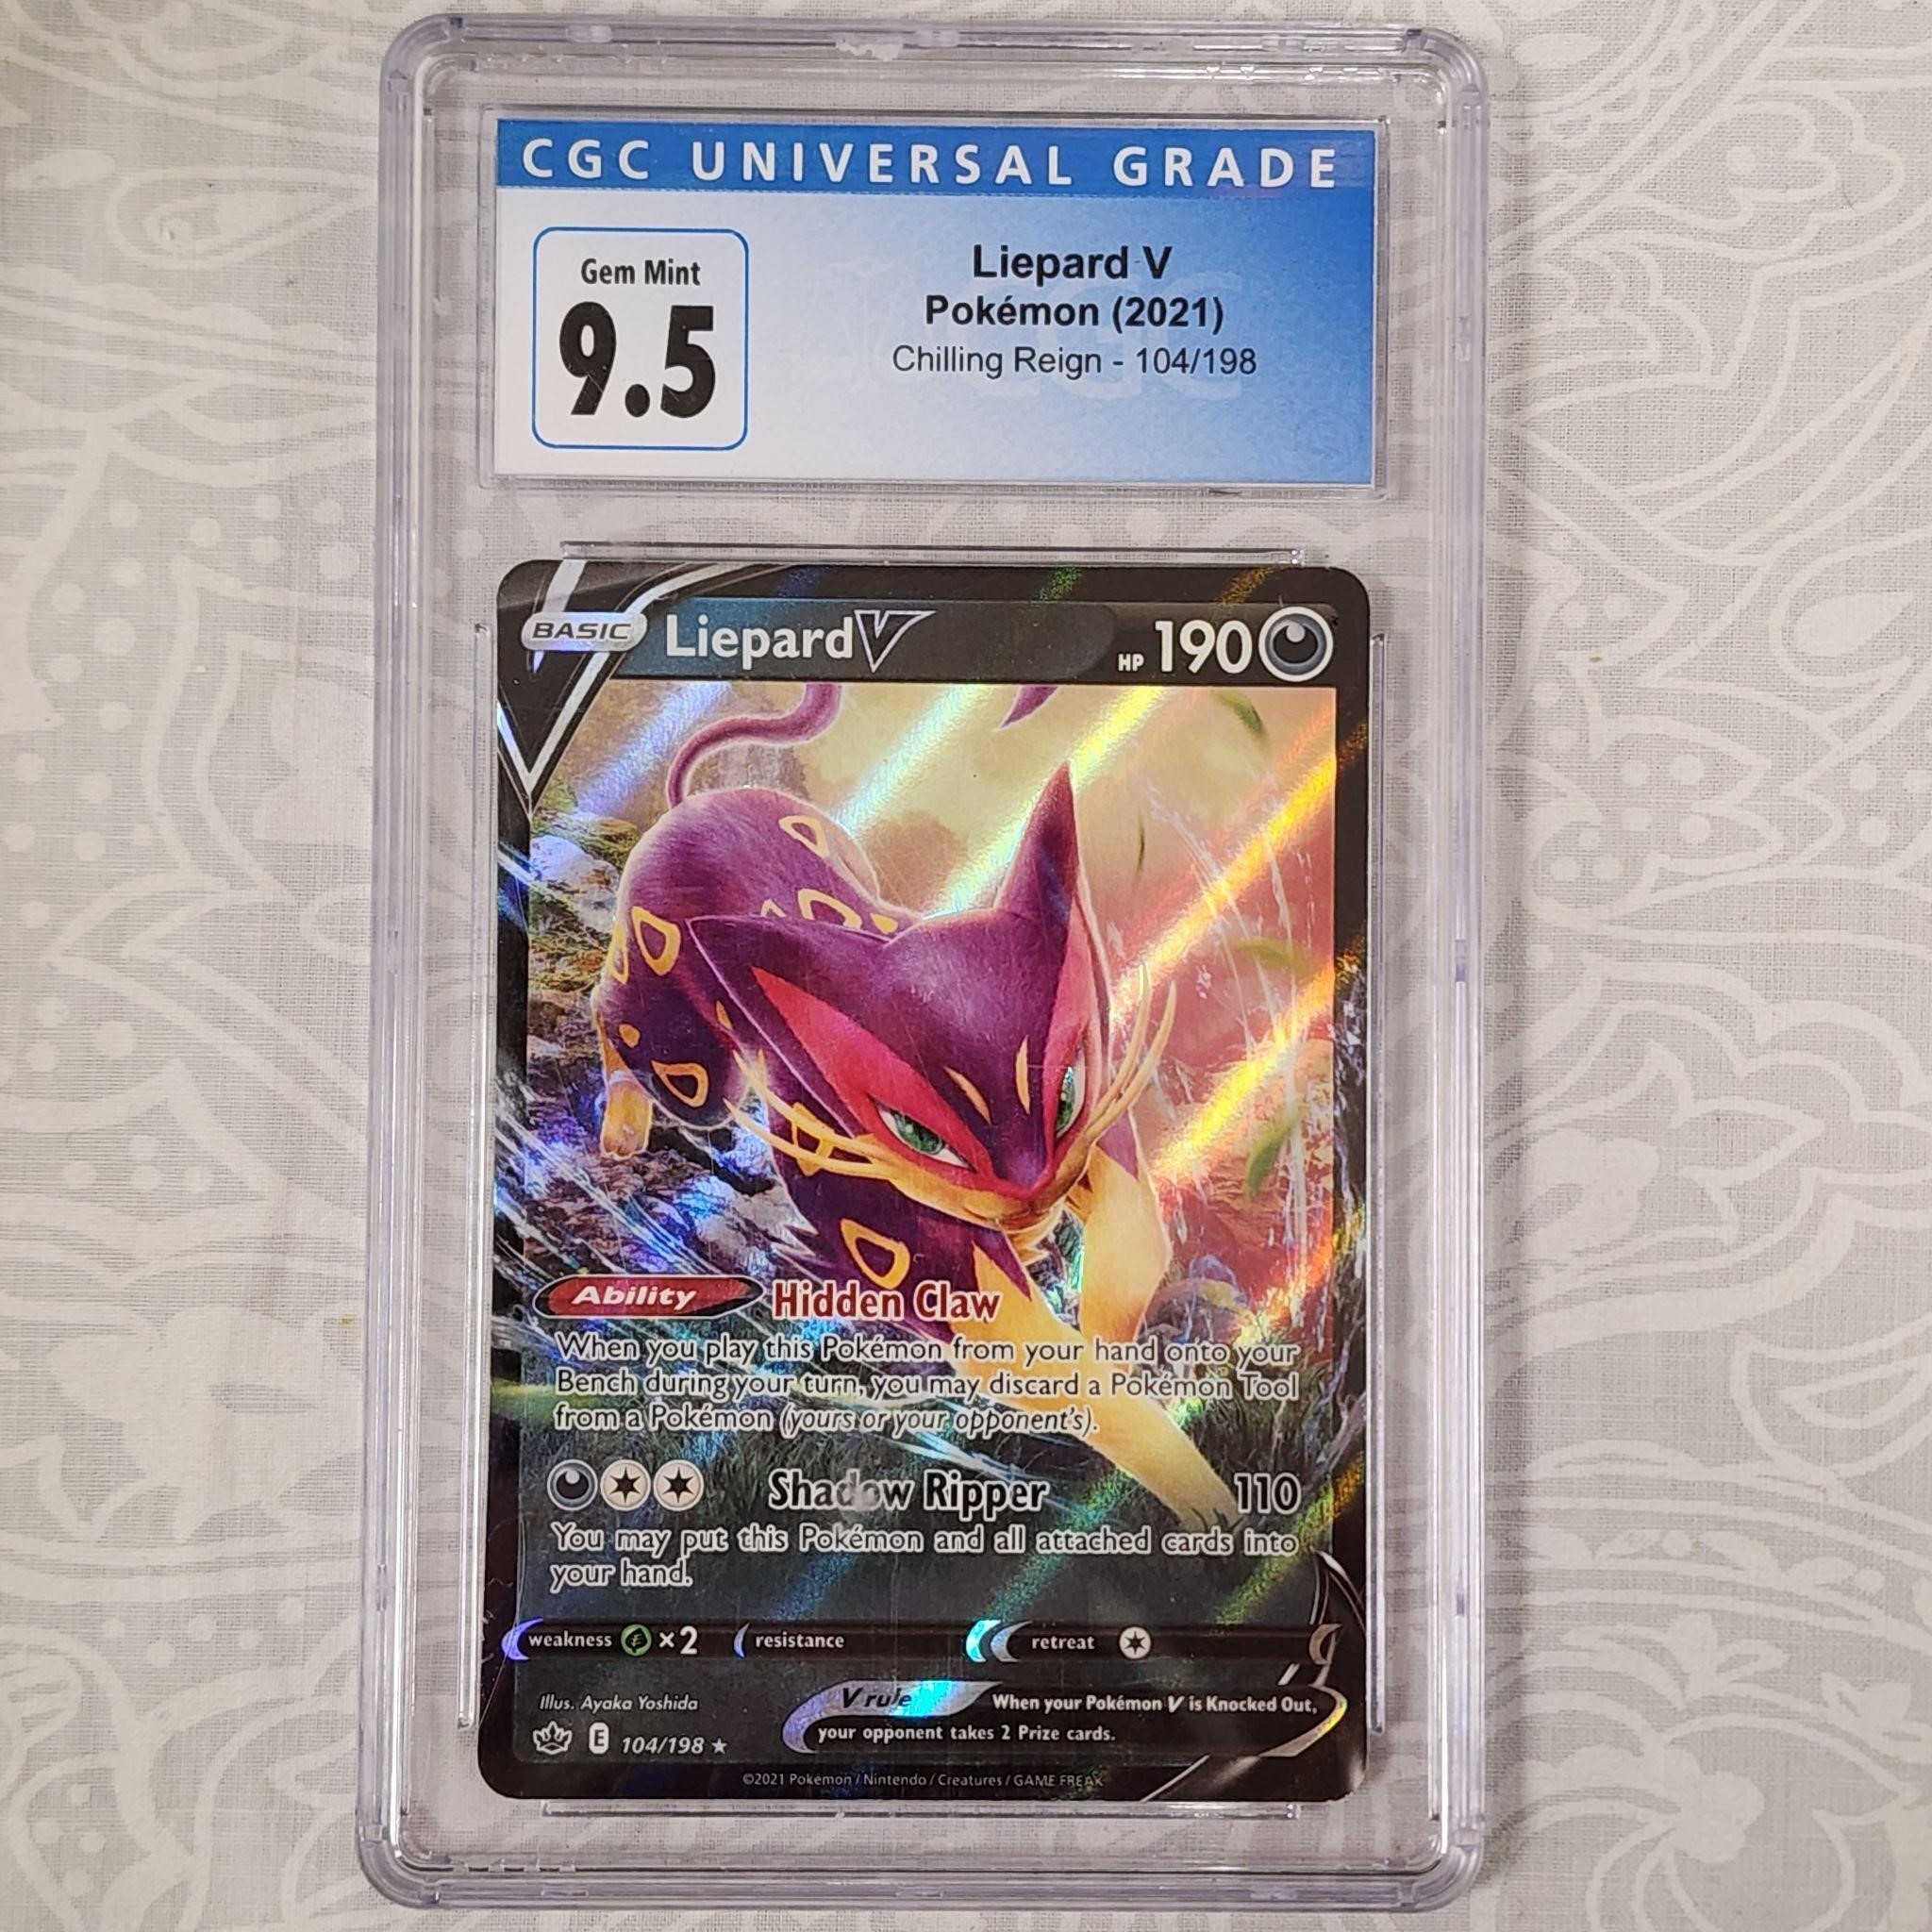 CGC 9.5 Gem Mint Liepard V Pokémon Card